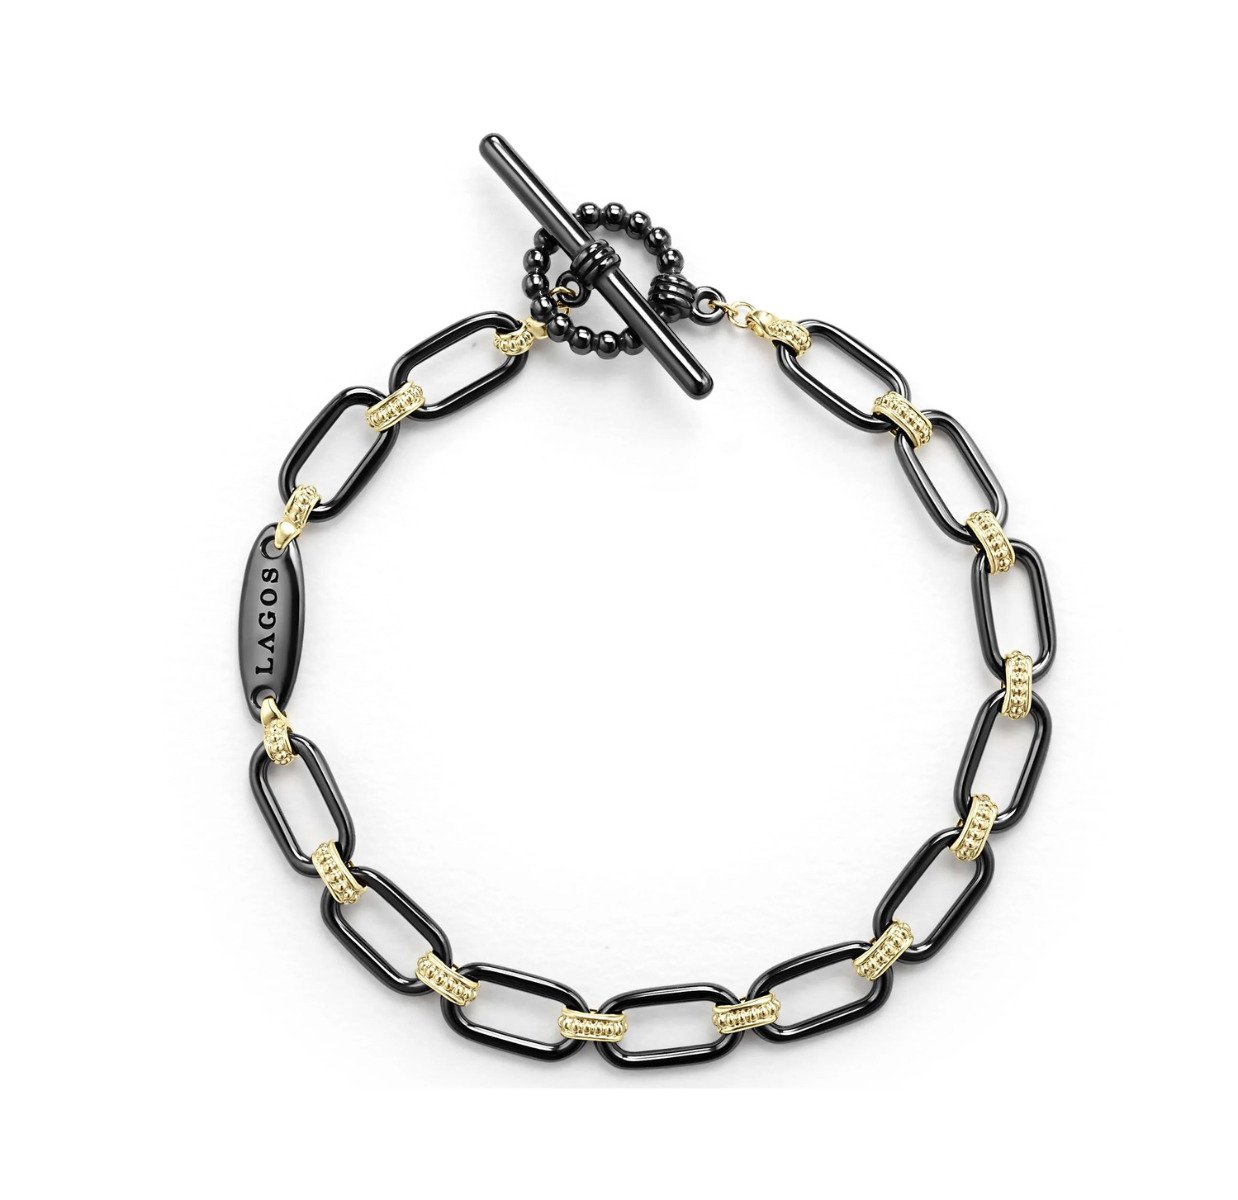 LAGOS "Signature Caviar" 18kt Gold and Black Ceramic Link Bracelet, Size 8